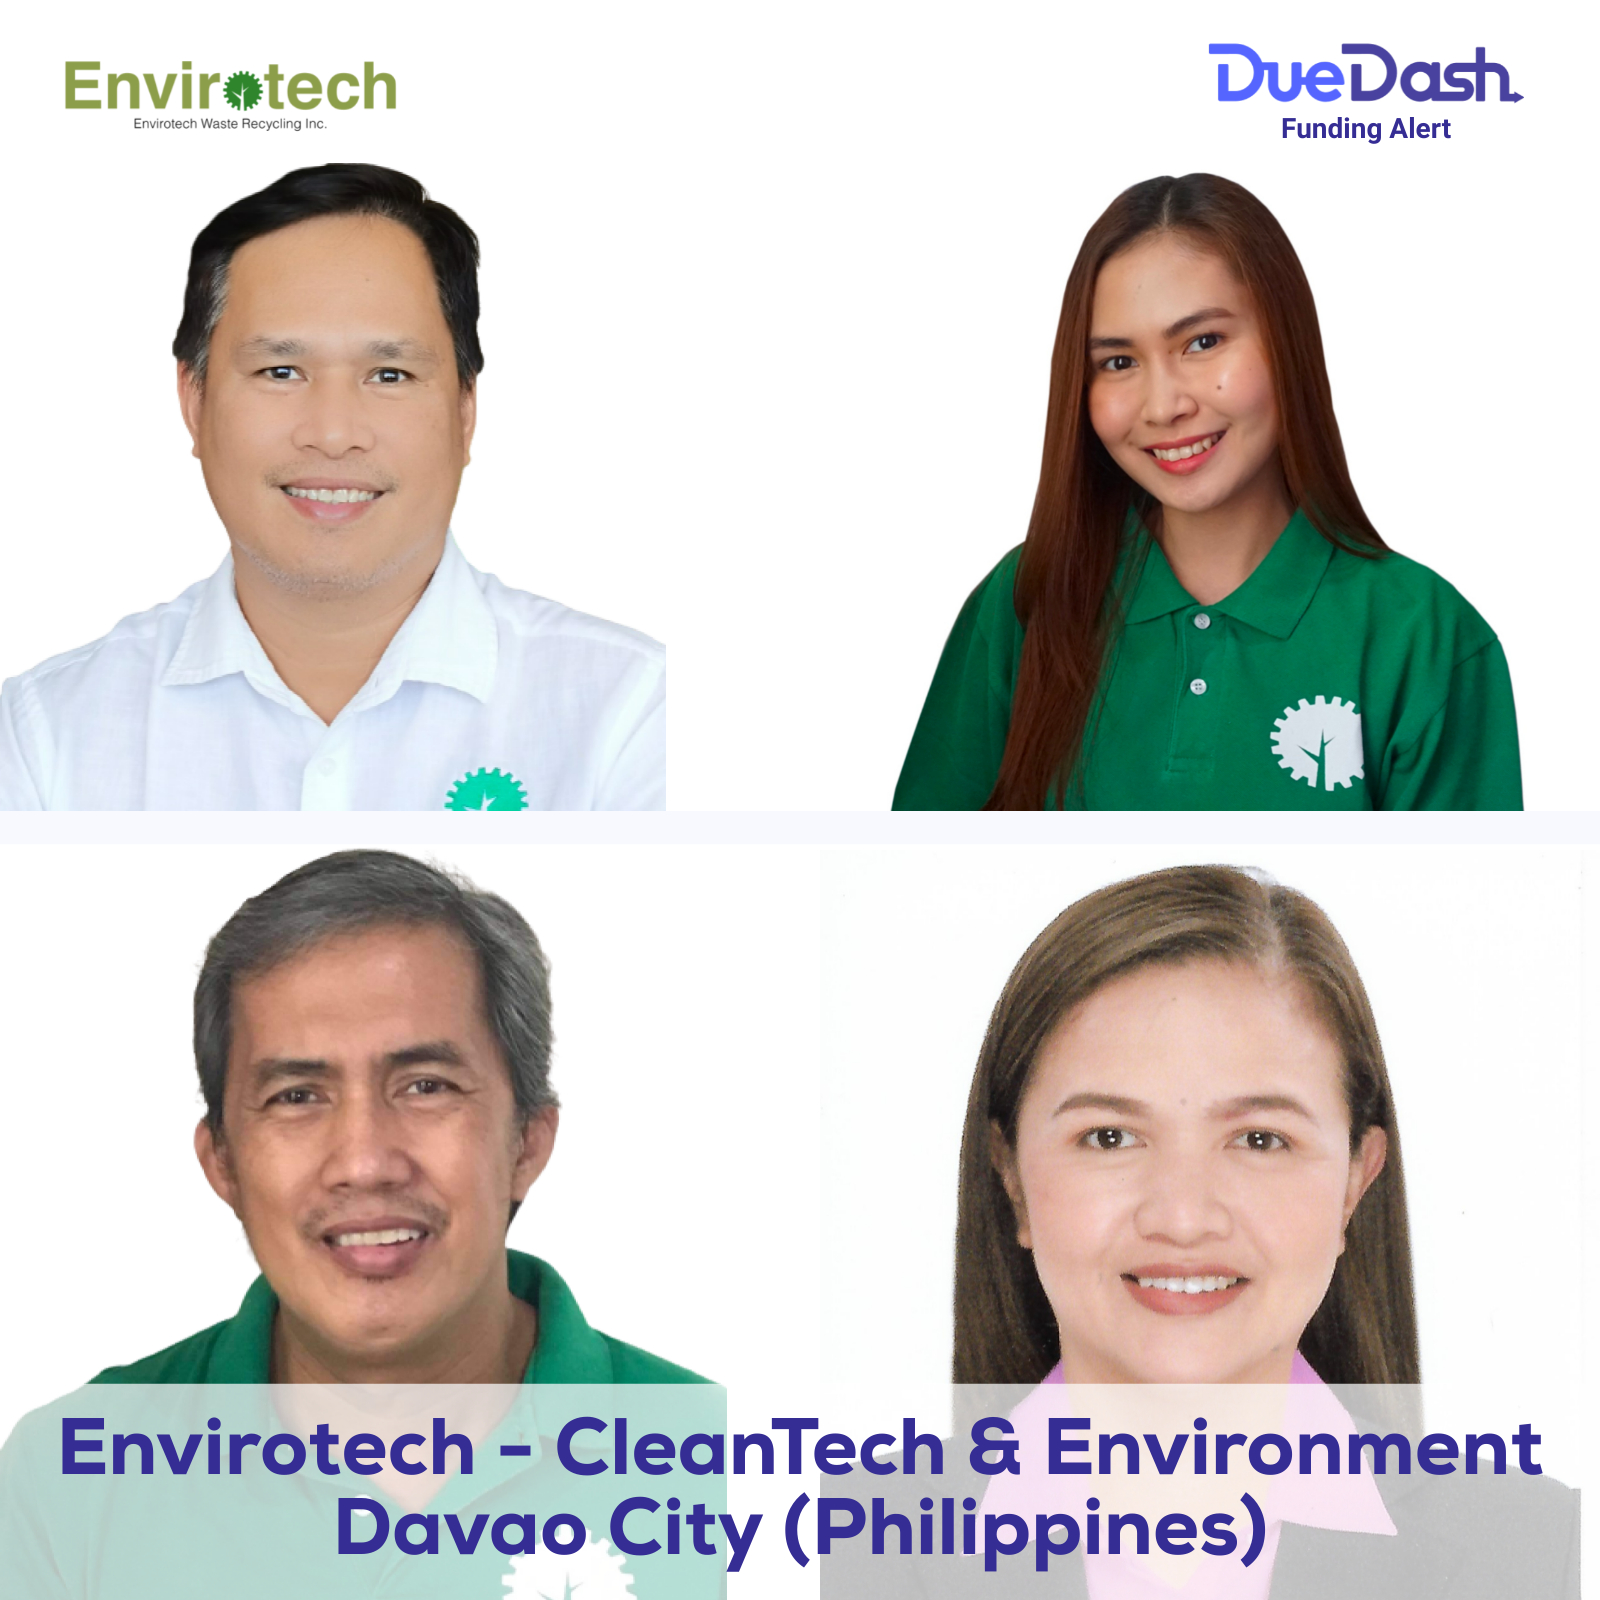 The Envirotech team